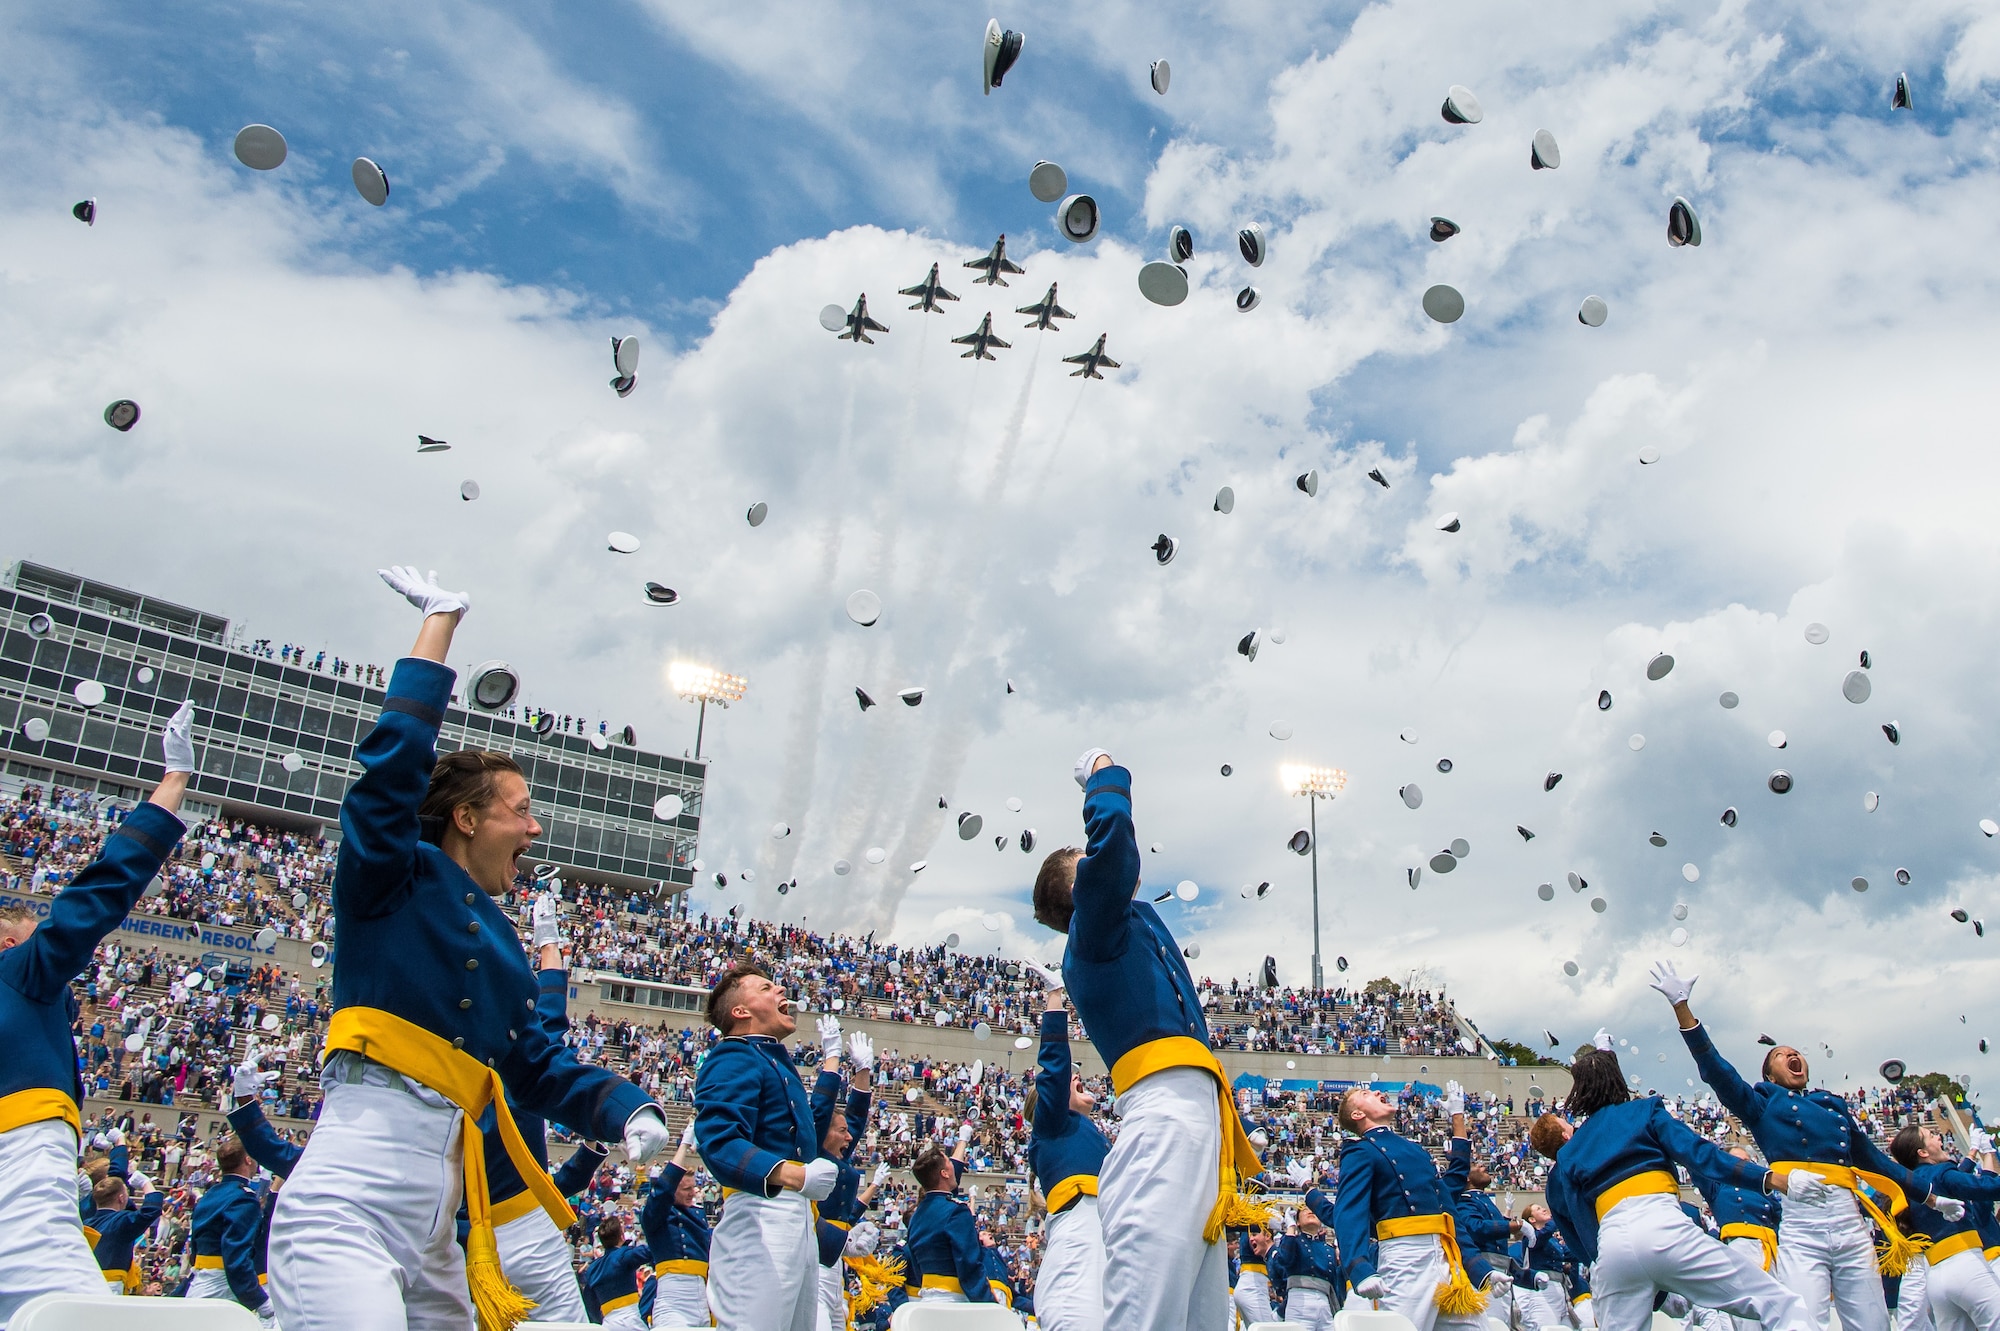 U.S. Air Force Academy Class of 2021 graduates toss their service caps as the U.S. Air Force Thunderbirds fly overhead